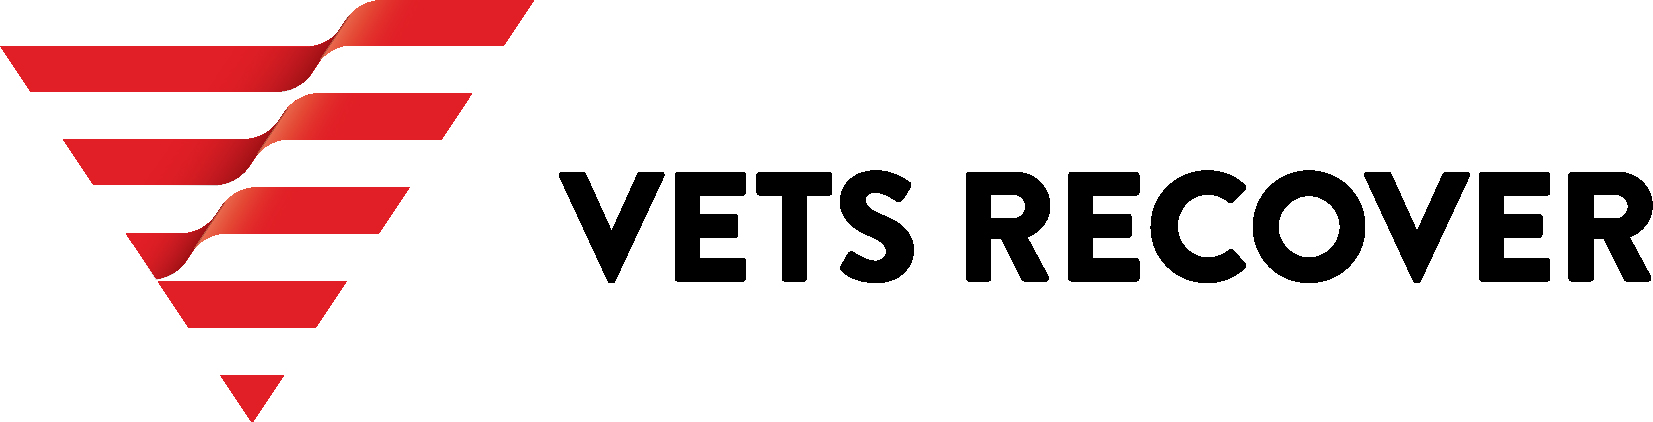 vets recover logo